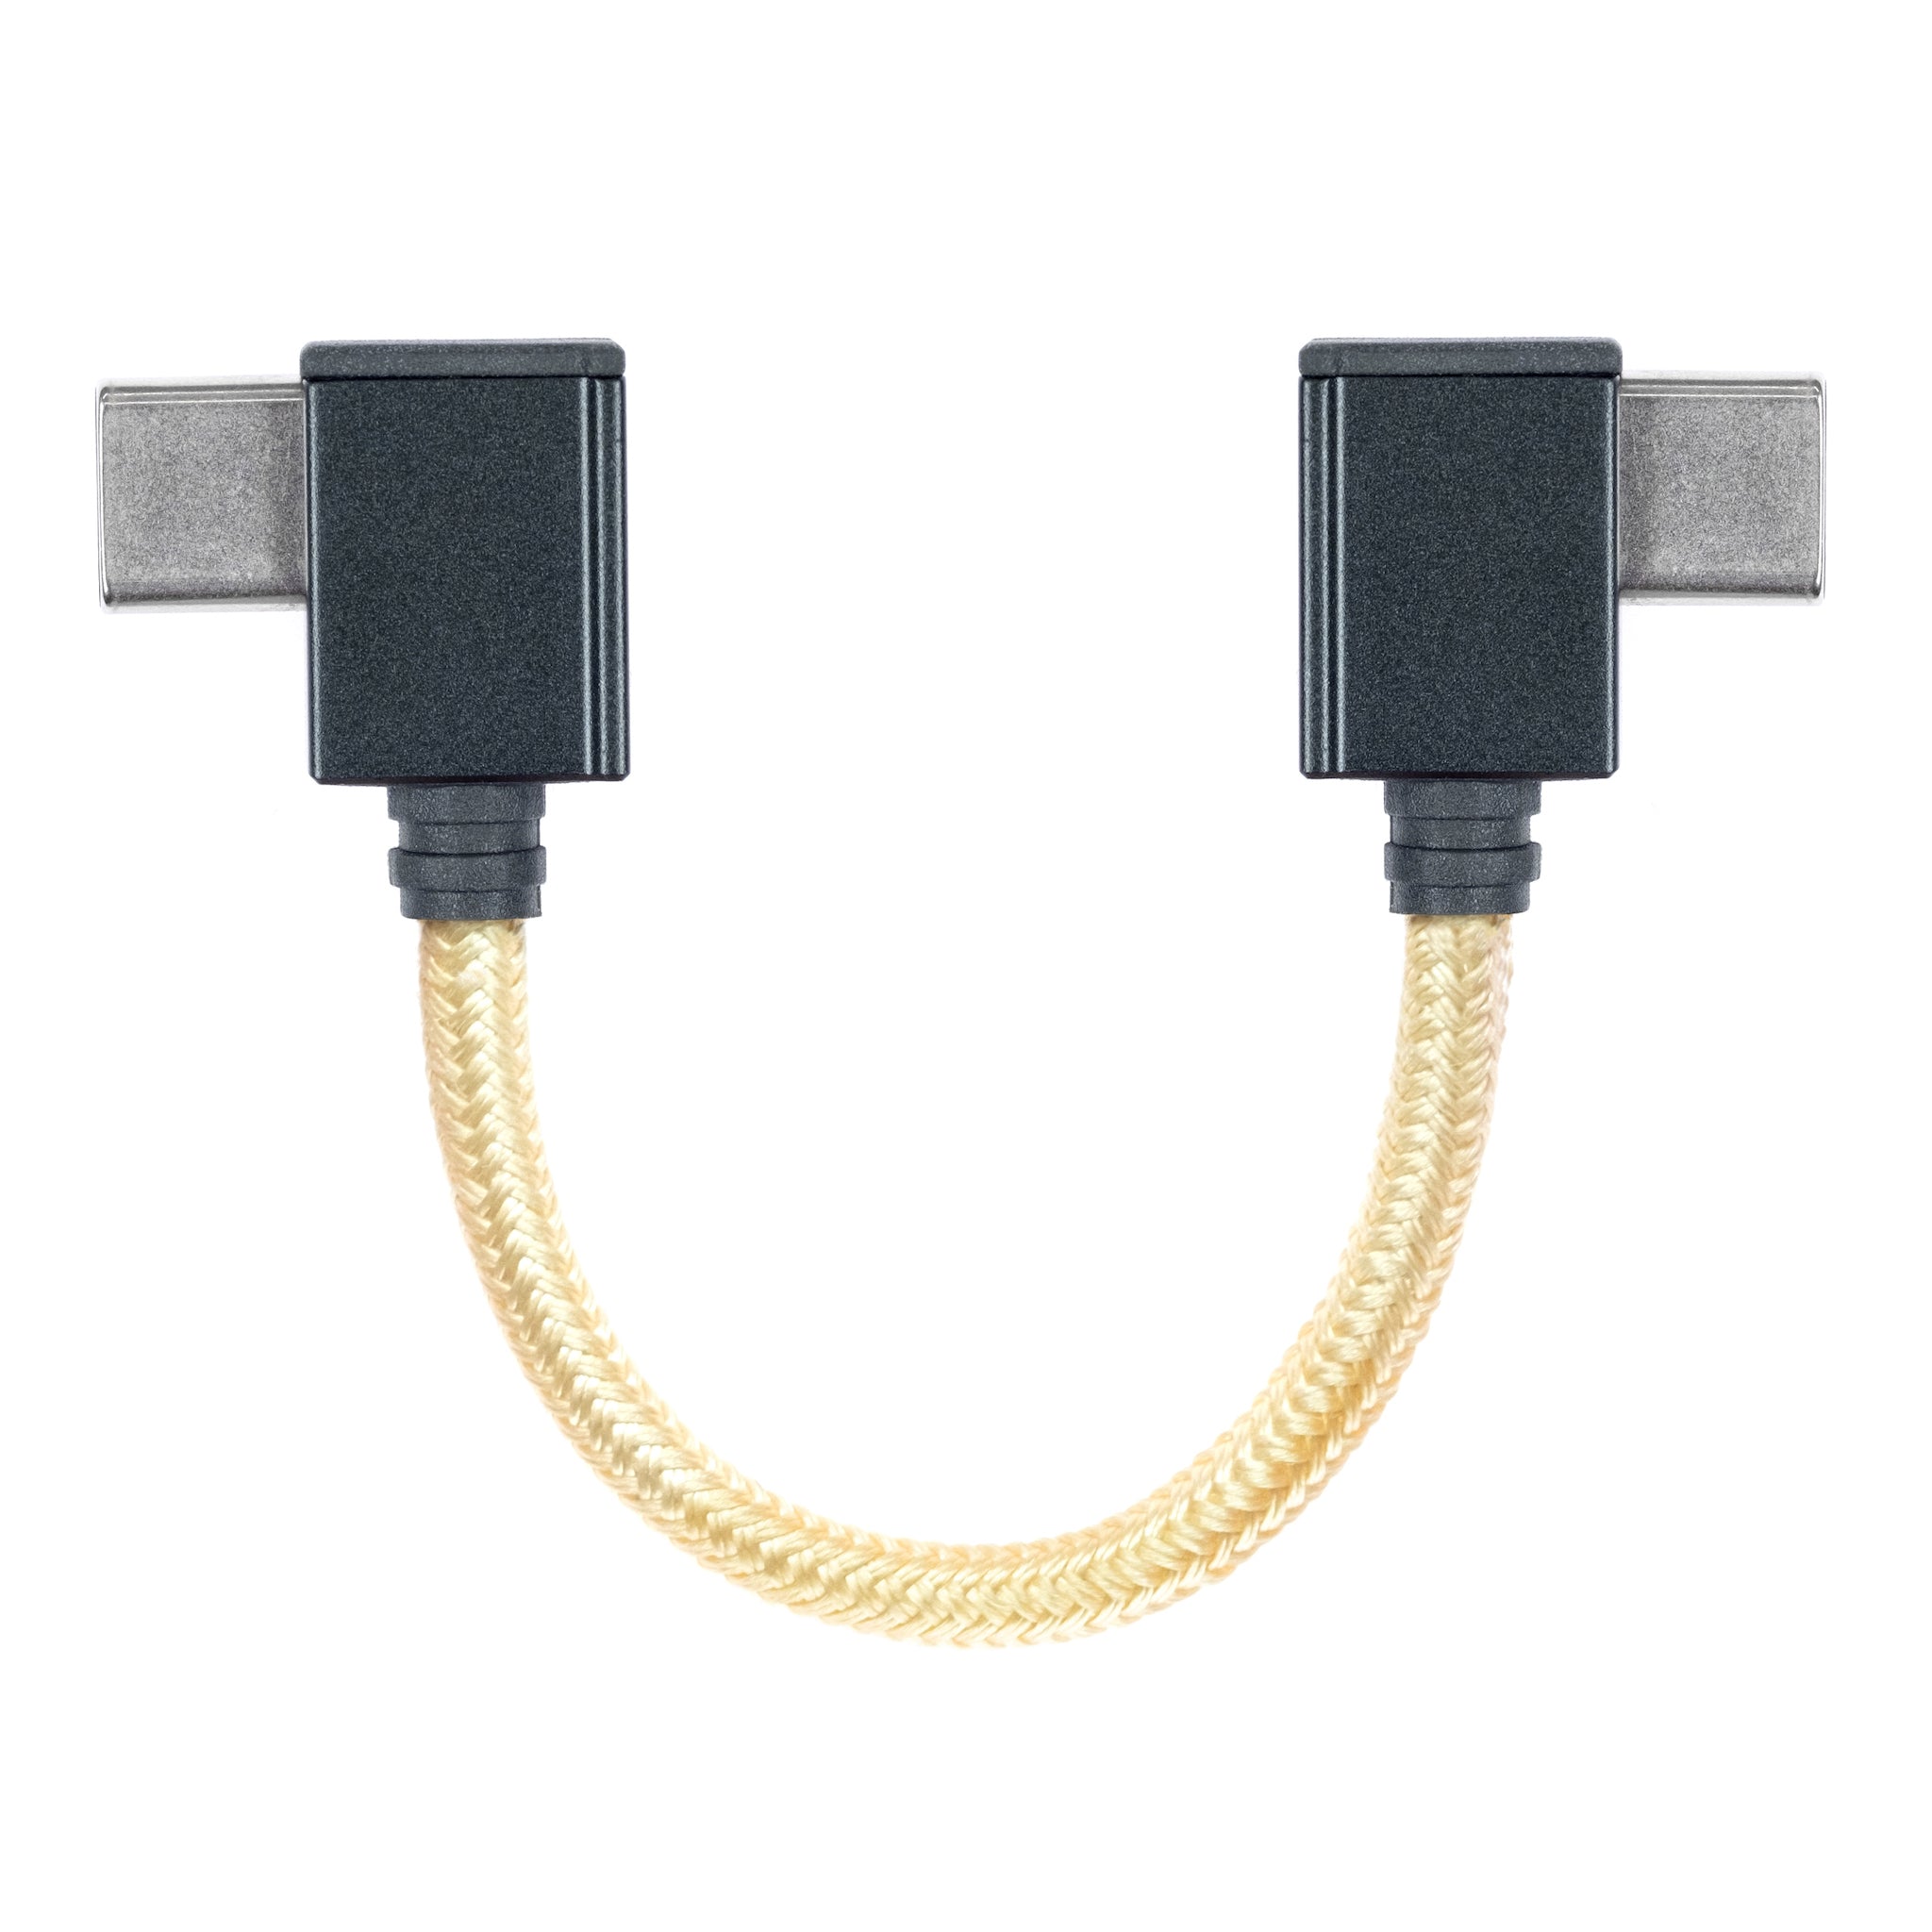 iFi Audio 90 degree USB Type-C OTG Cable | Bloom Audio